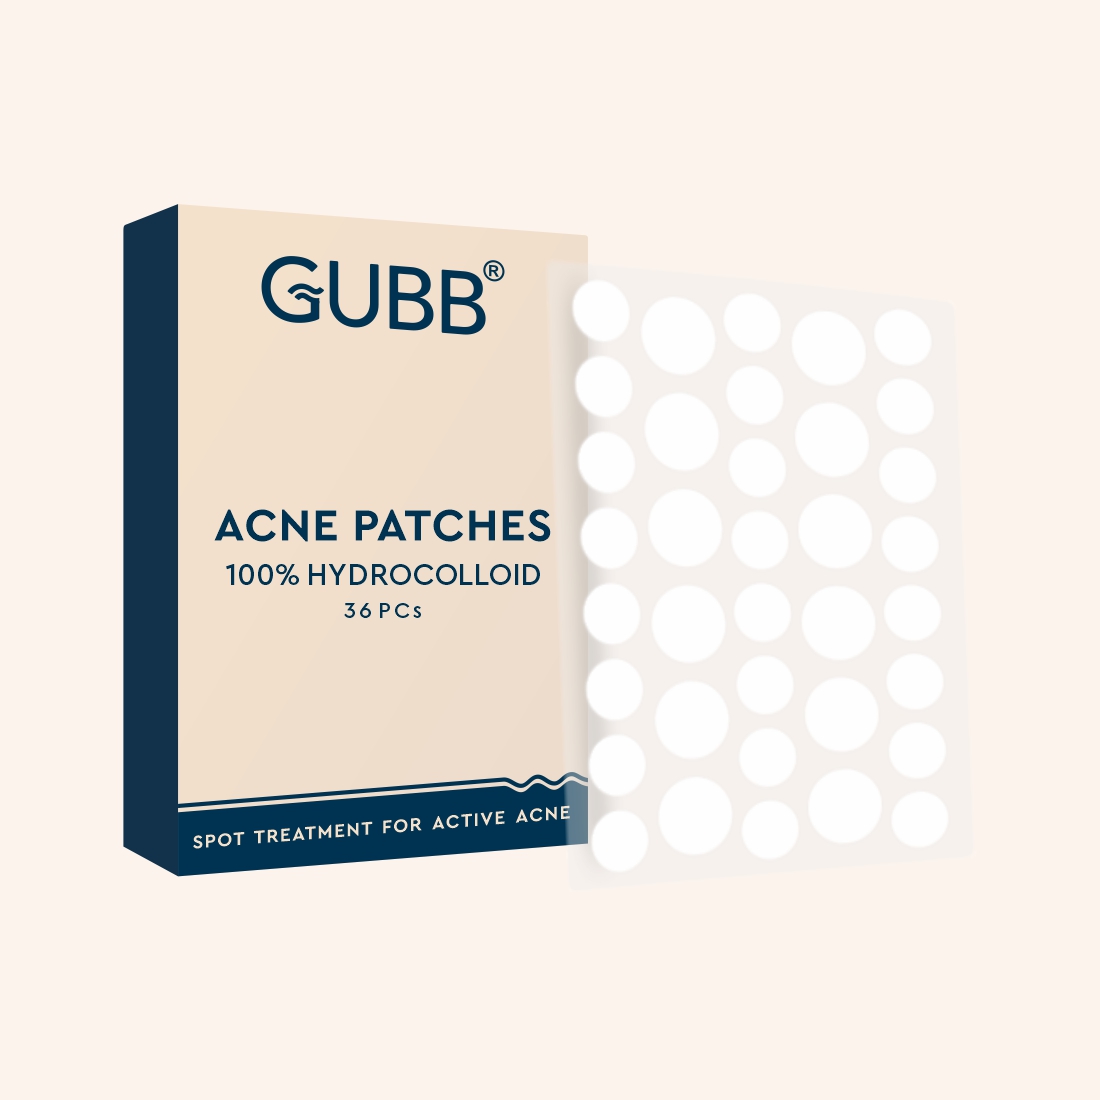 Acne Patches (100% Hydrocolloid) 36 PCs